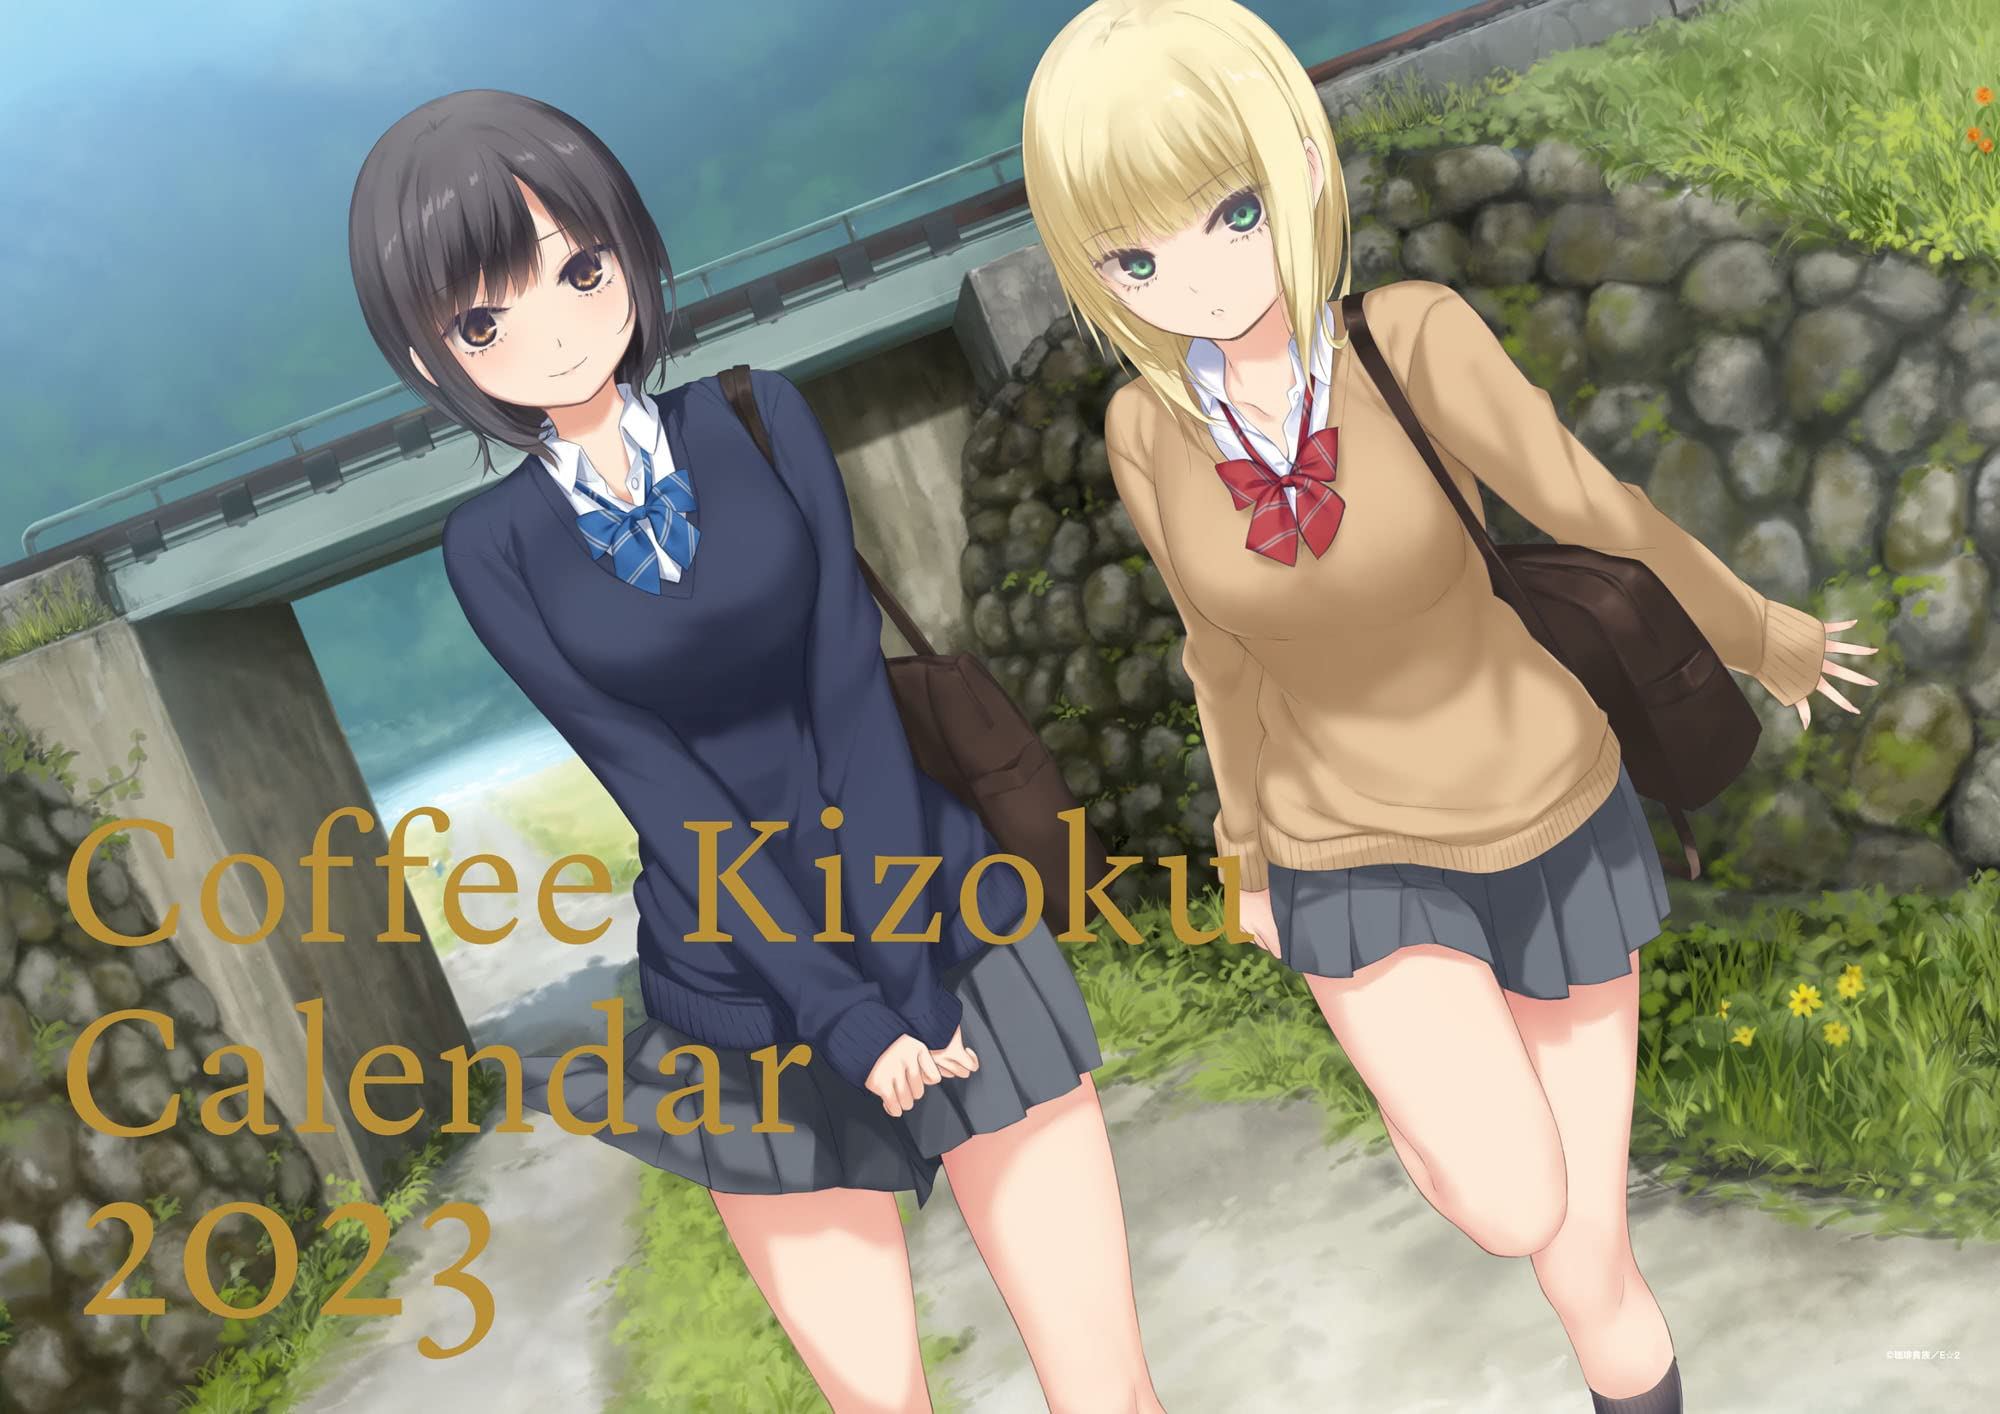 Coffee Kizoku Artist Calendar 2023